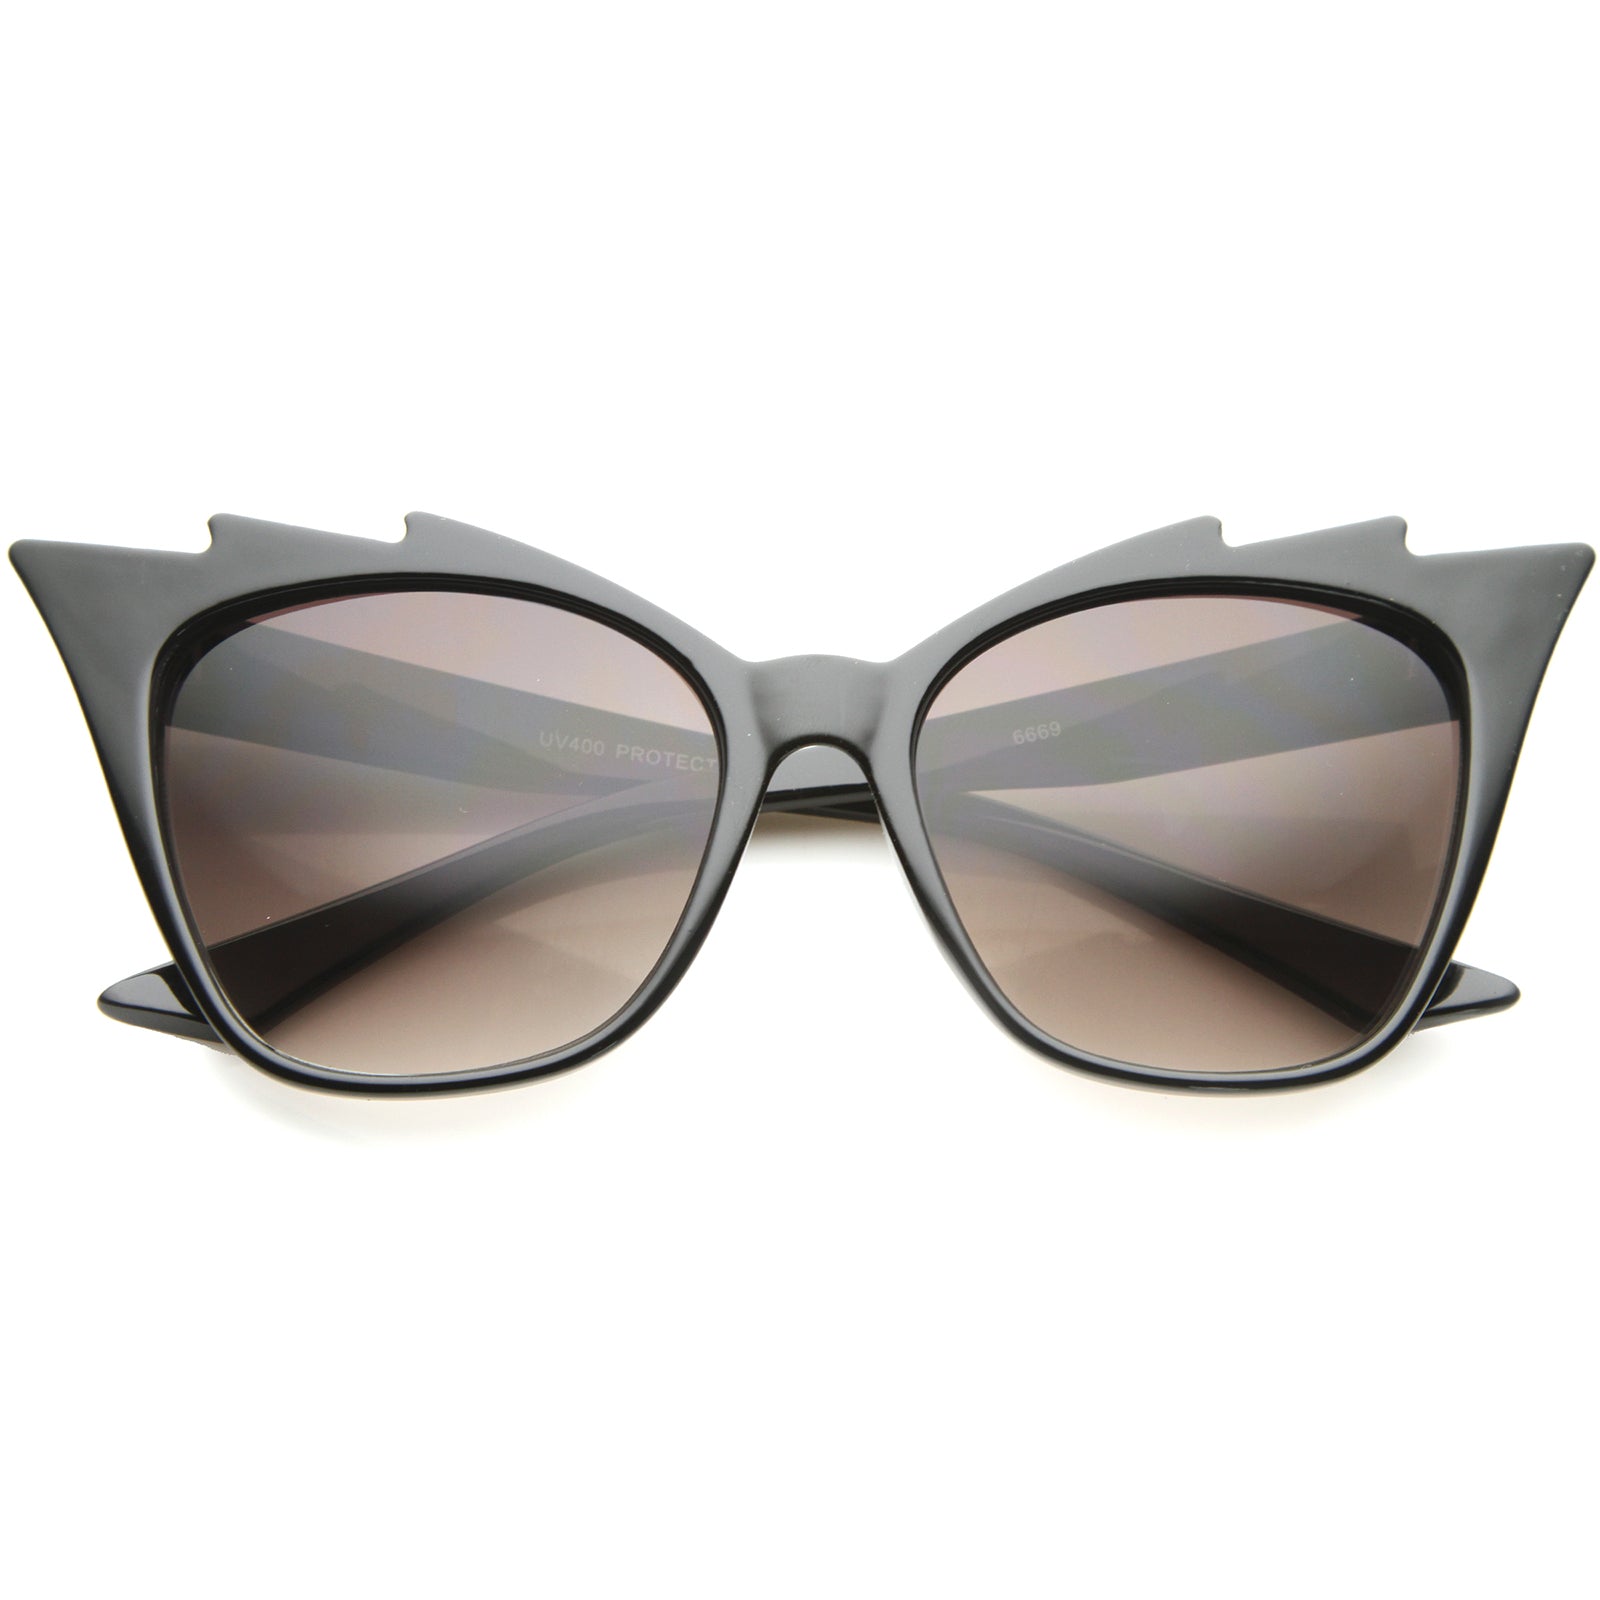 glam rock sunglasses